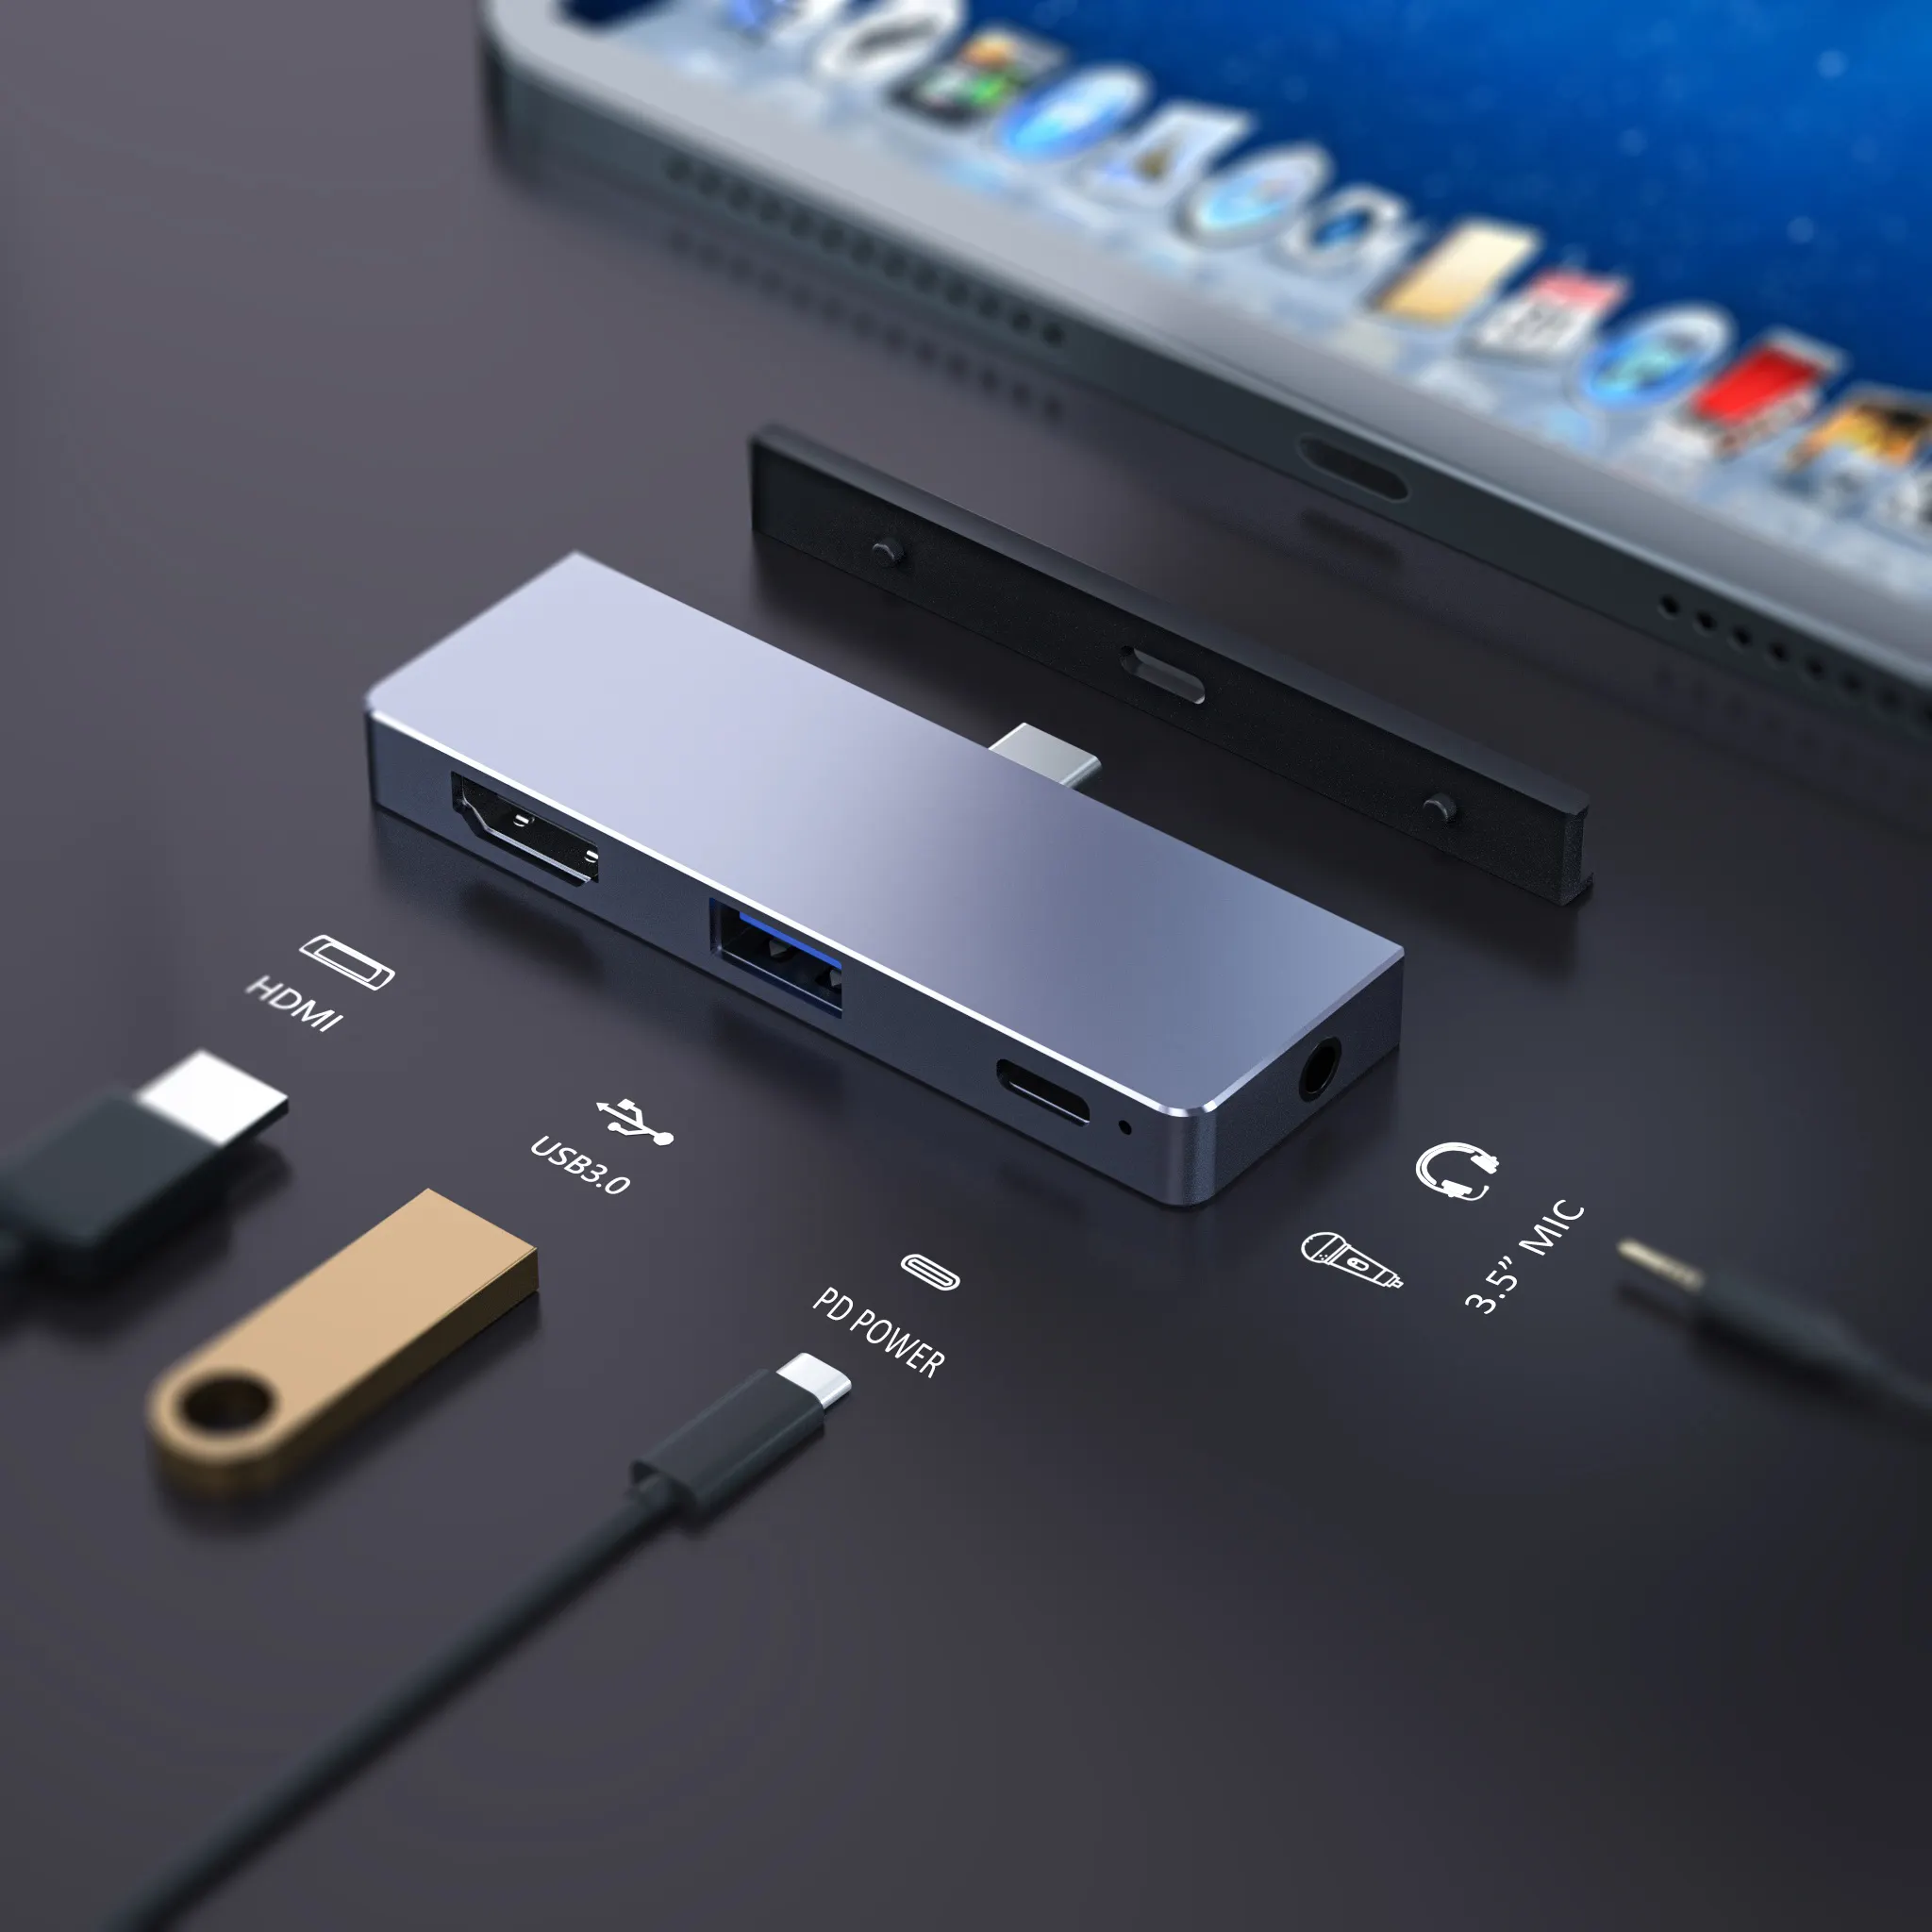 Vip HUB Tipe C Pad 4 IN 1 Portabel Eksklusif dengan Dibalut Aluminium atau Notebook USB C Port HUB